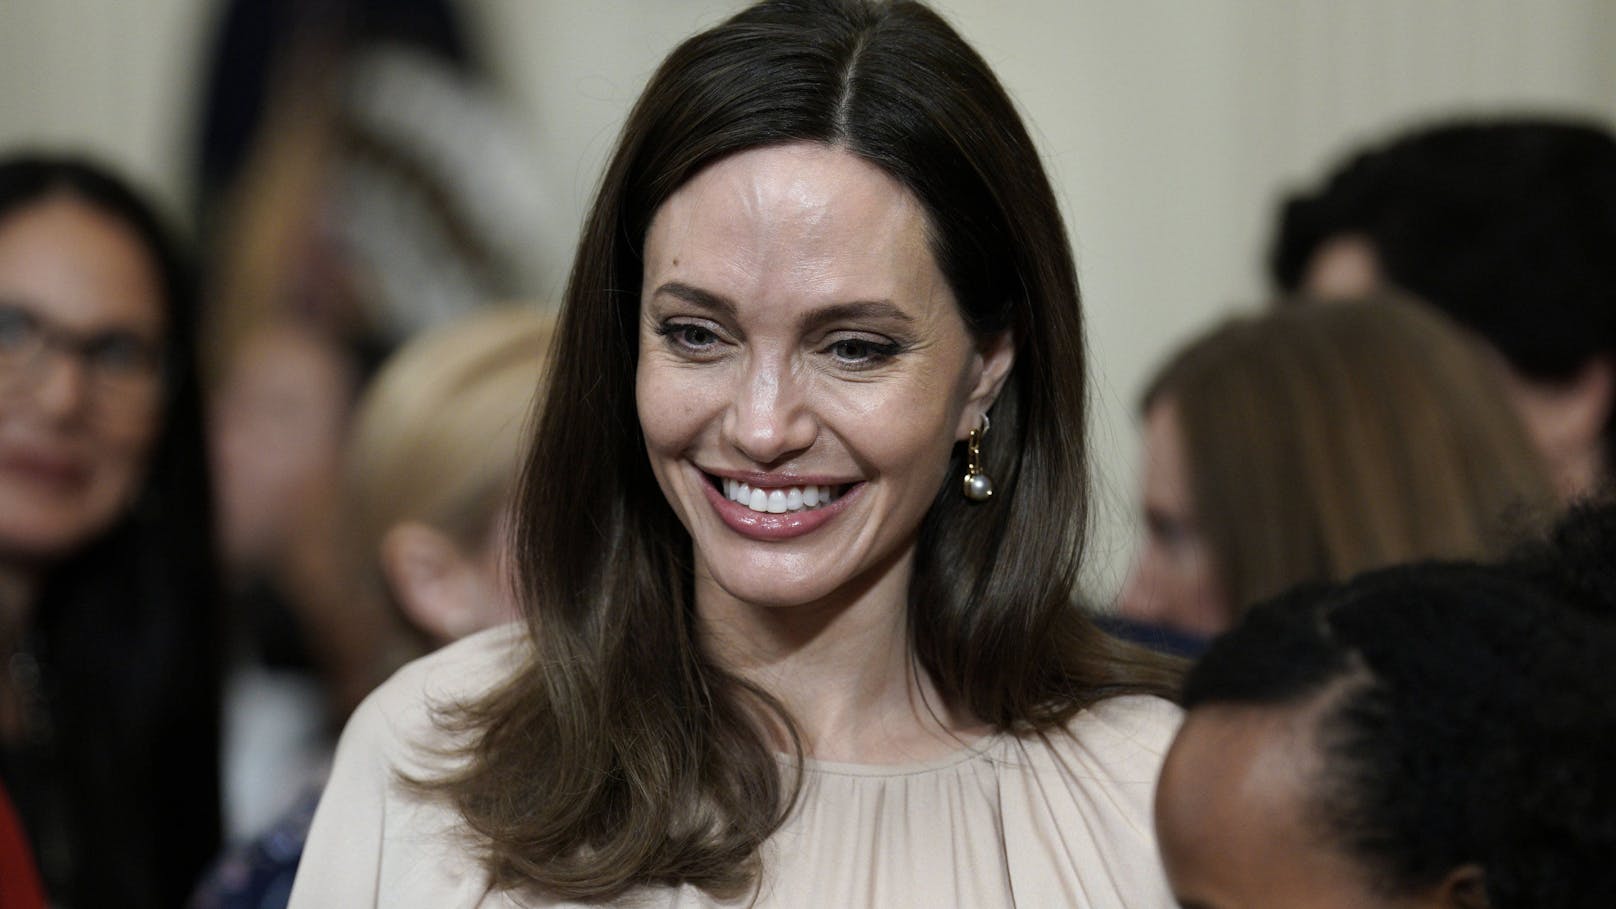 "Sobald ich kann": Jolie will Hollywood Rücken kehren